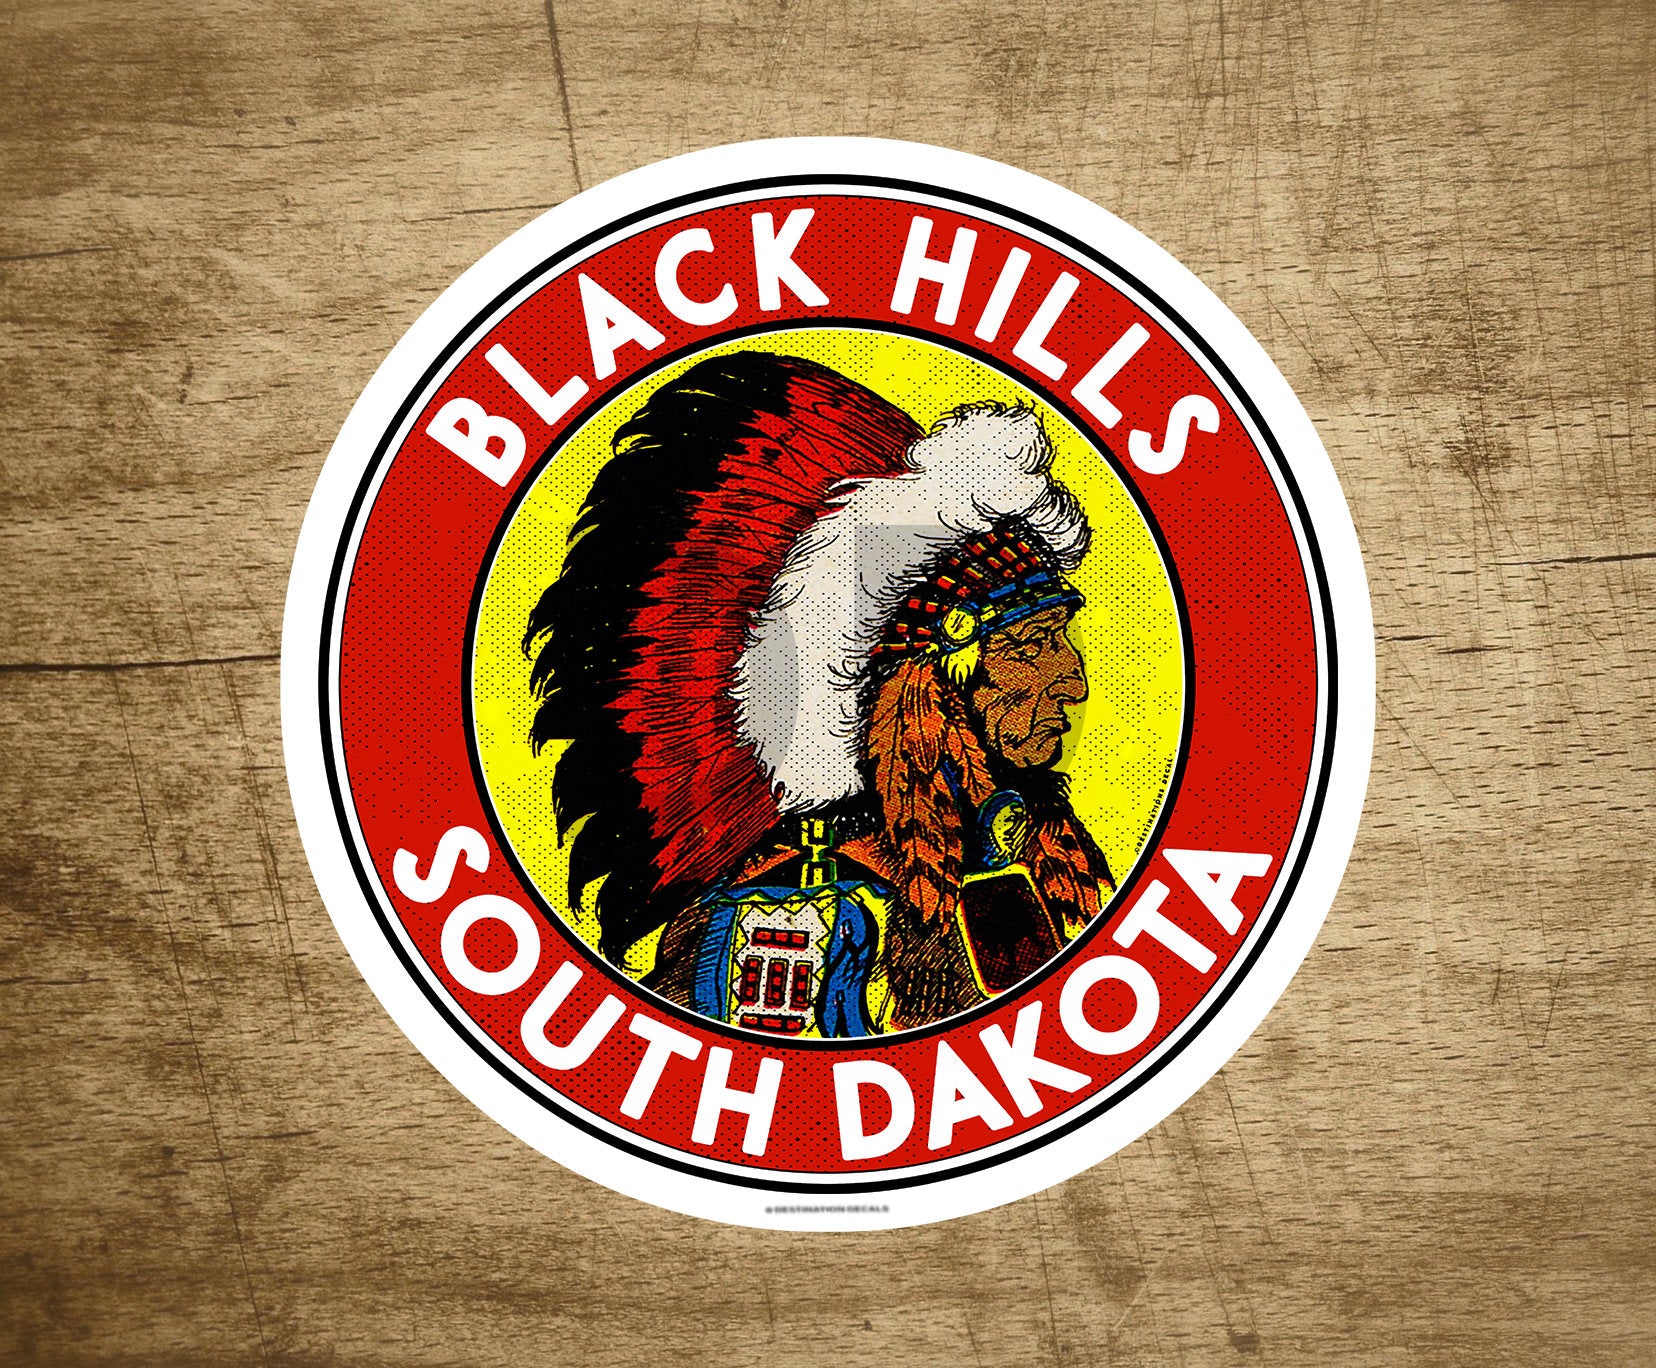 Black Hills South Dakota Decal Sticker 3" x 3" Vinyl Mountains Hiking